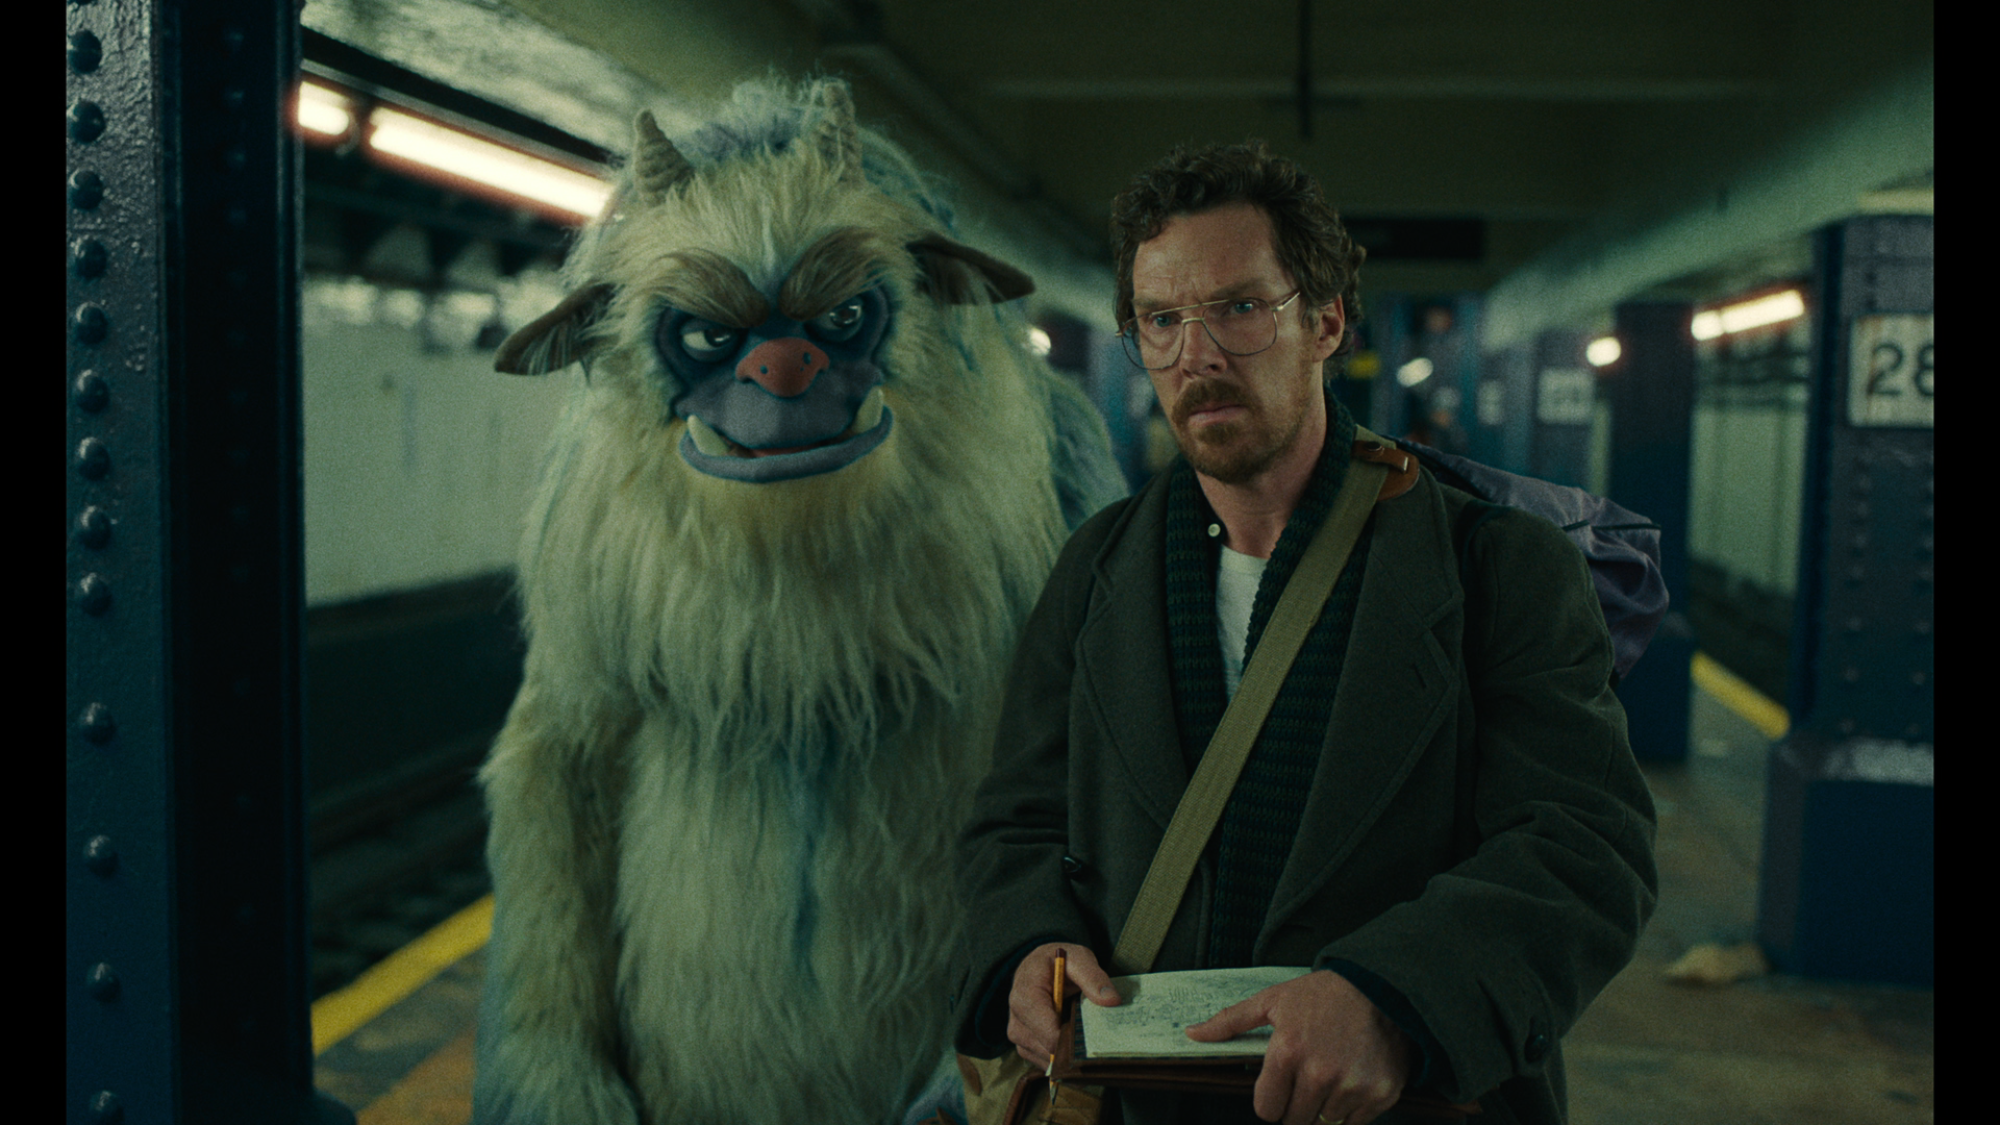 A life-size monster puppet walking behind a man on a subway platform.